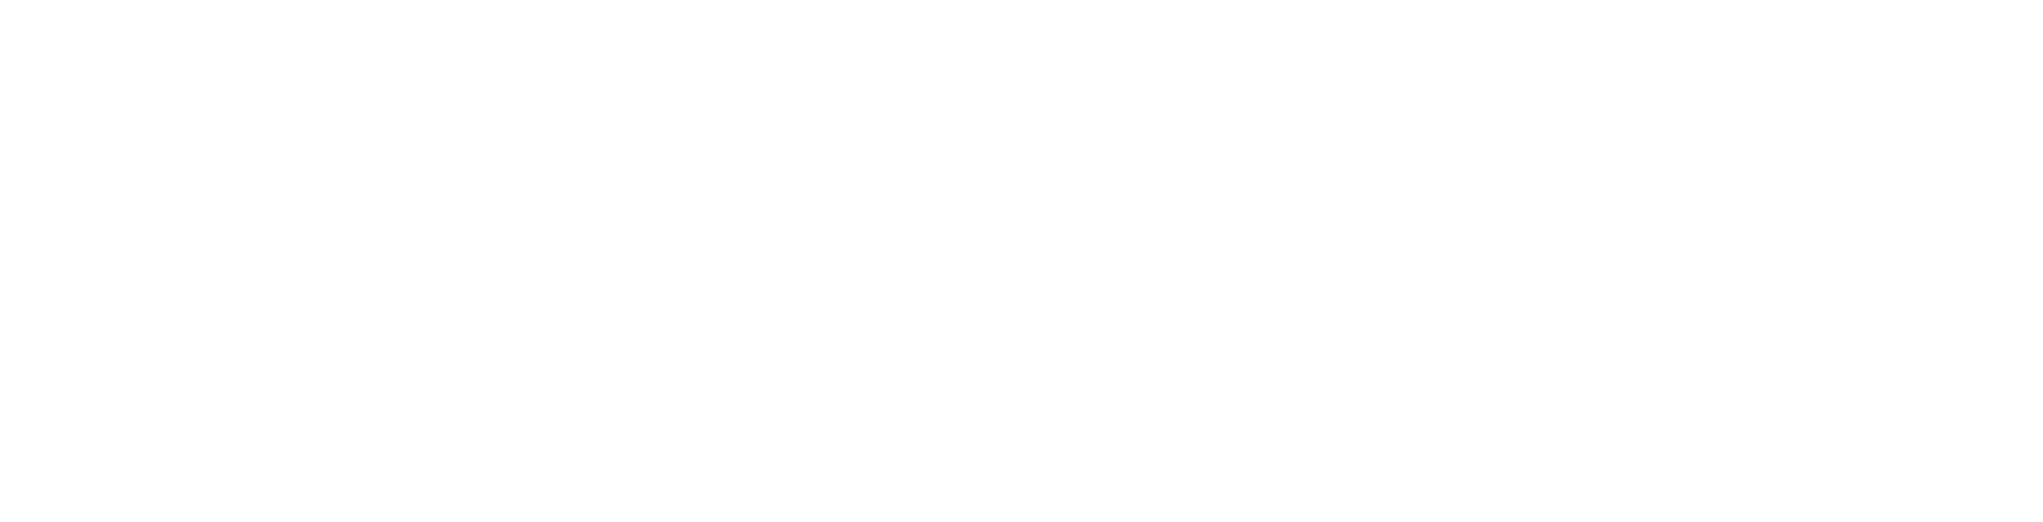 Chronicle Books Design Fellowship